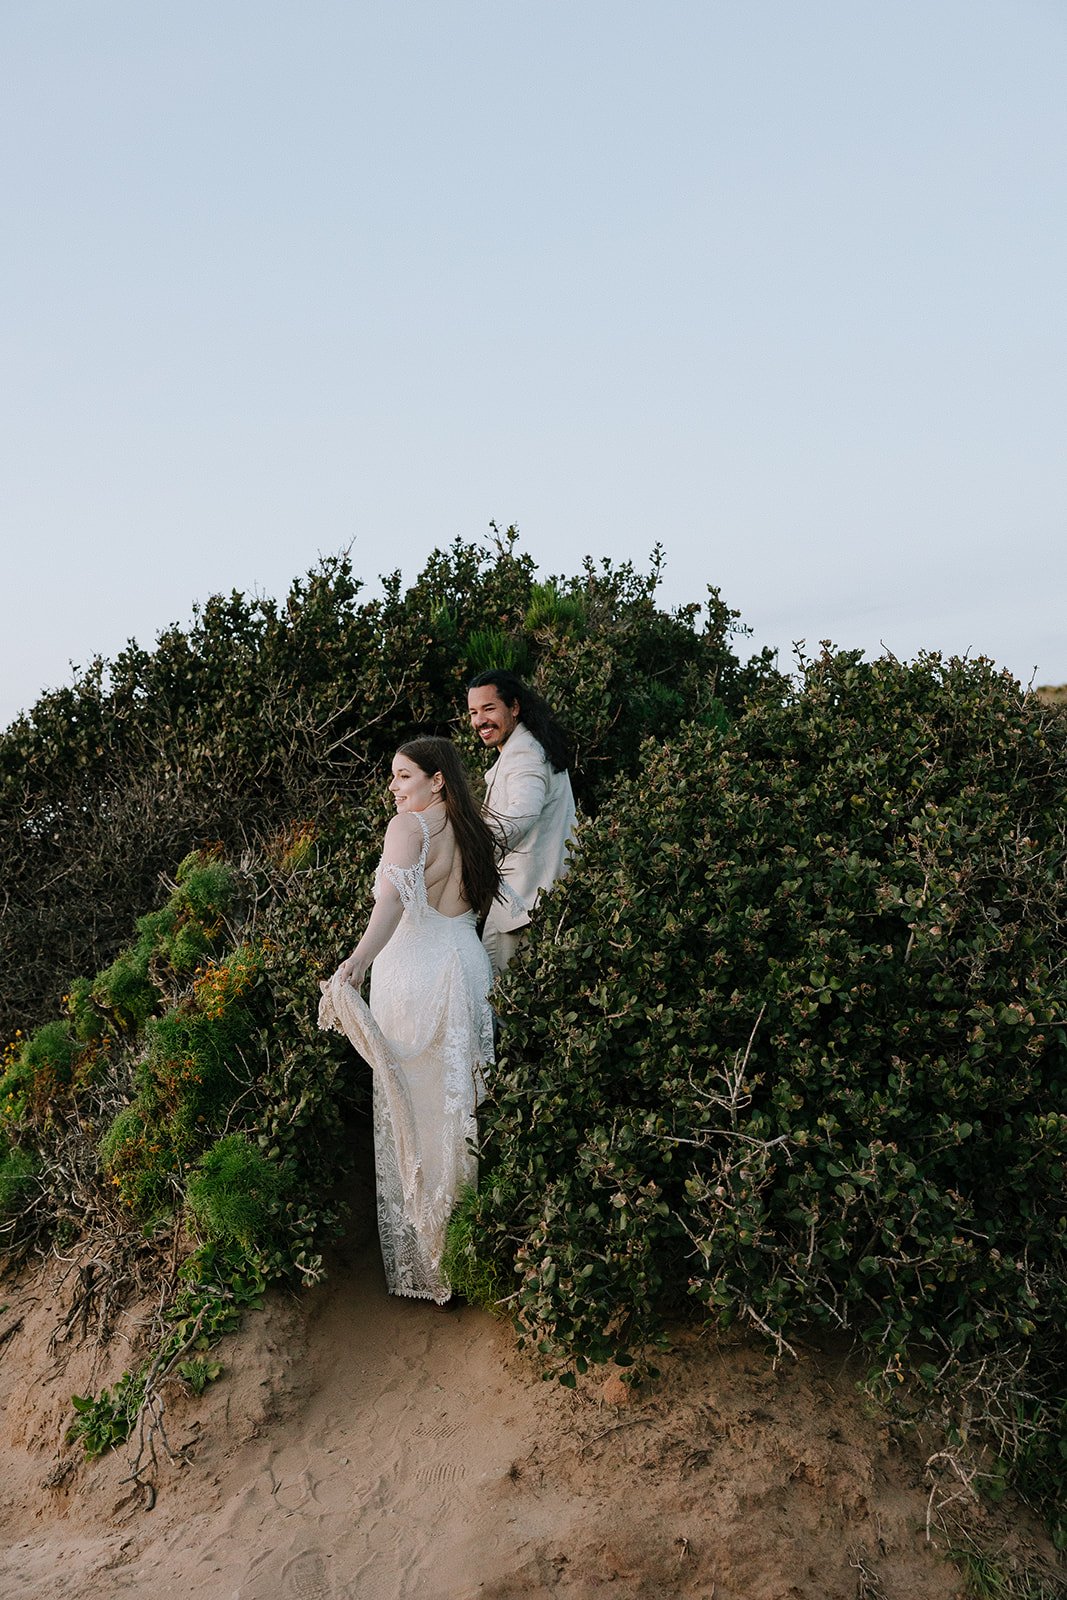 Intimate Malibu Elopement on The Beach - Natalie Nicole Photo - Destination Wedding Photographer (127).jpg